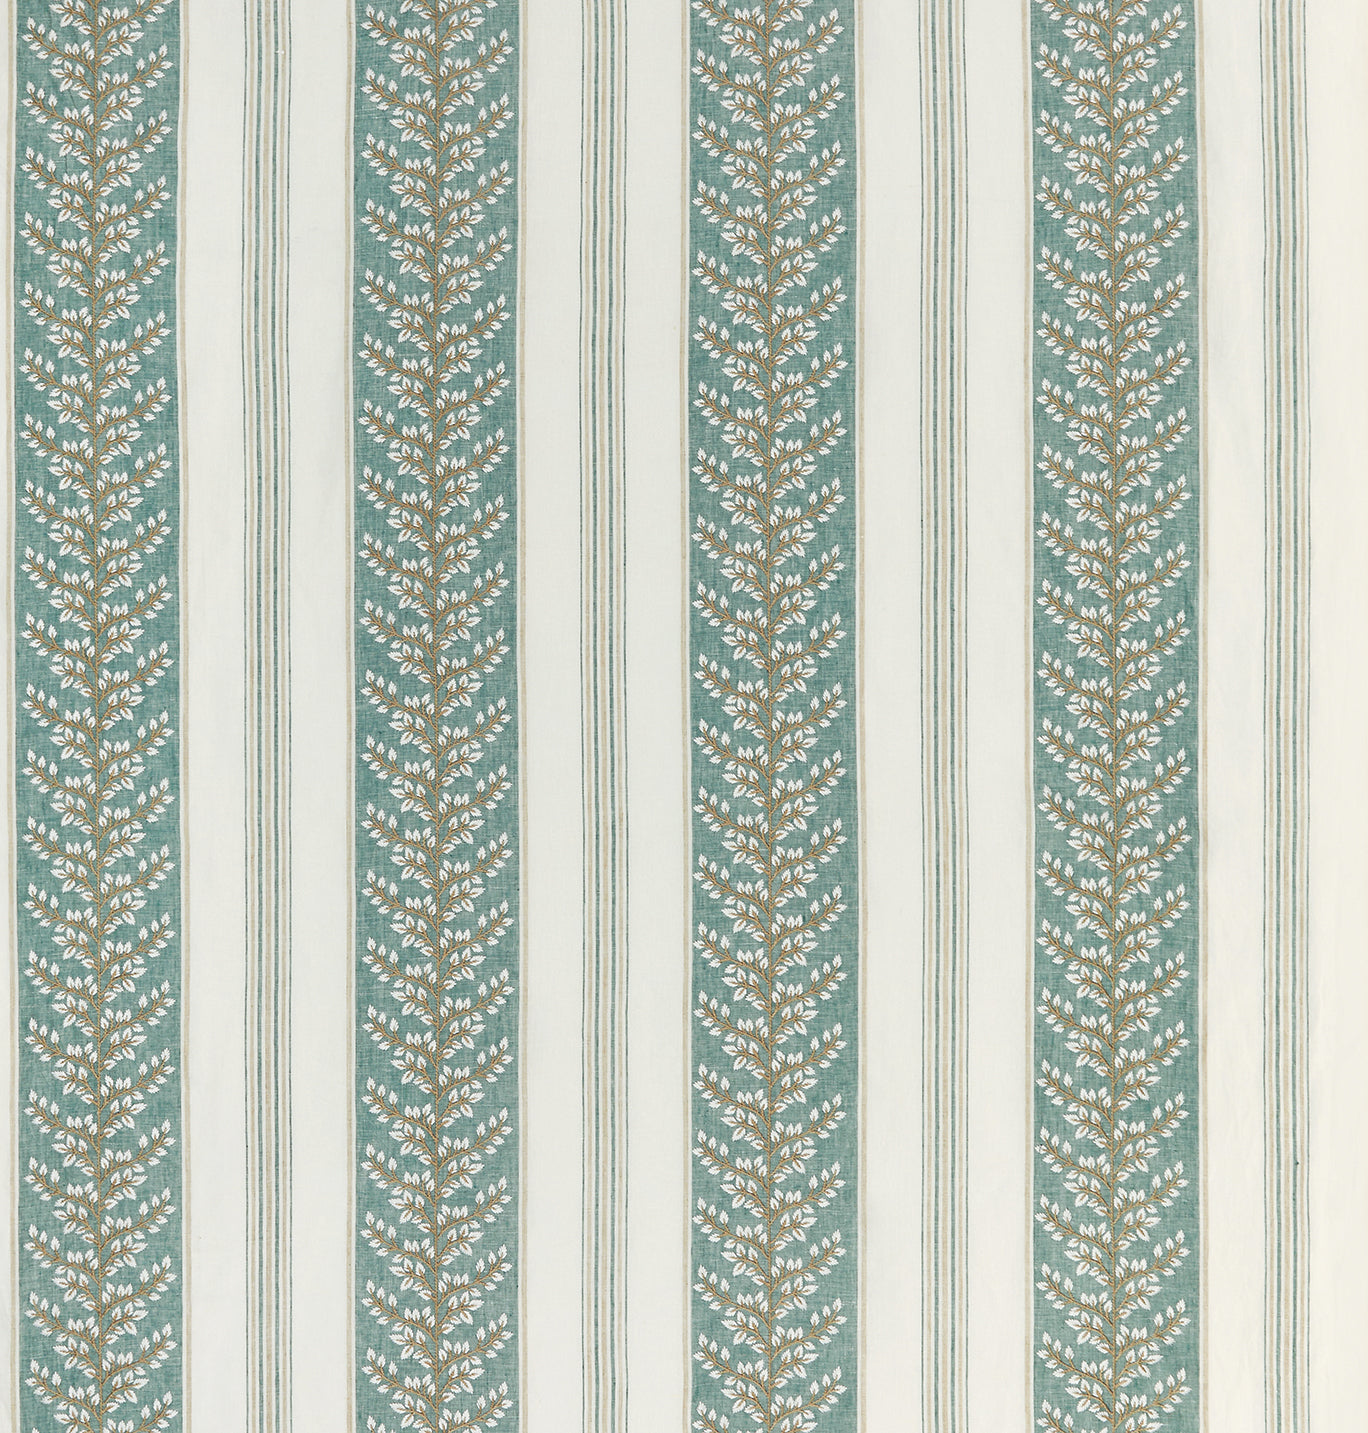 Nina Campbell Fabric - Woodbridge Manningtree Teal/Beige NCF4502-02